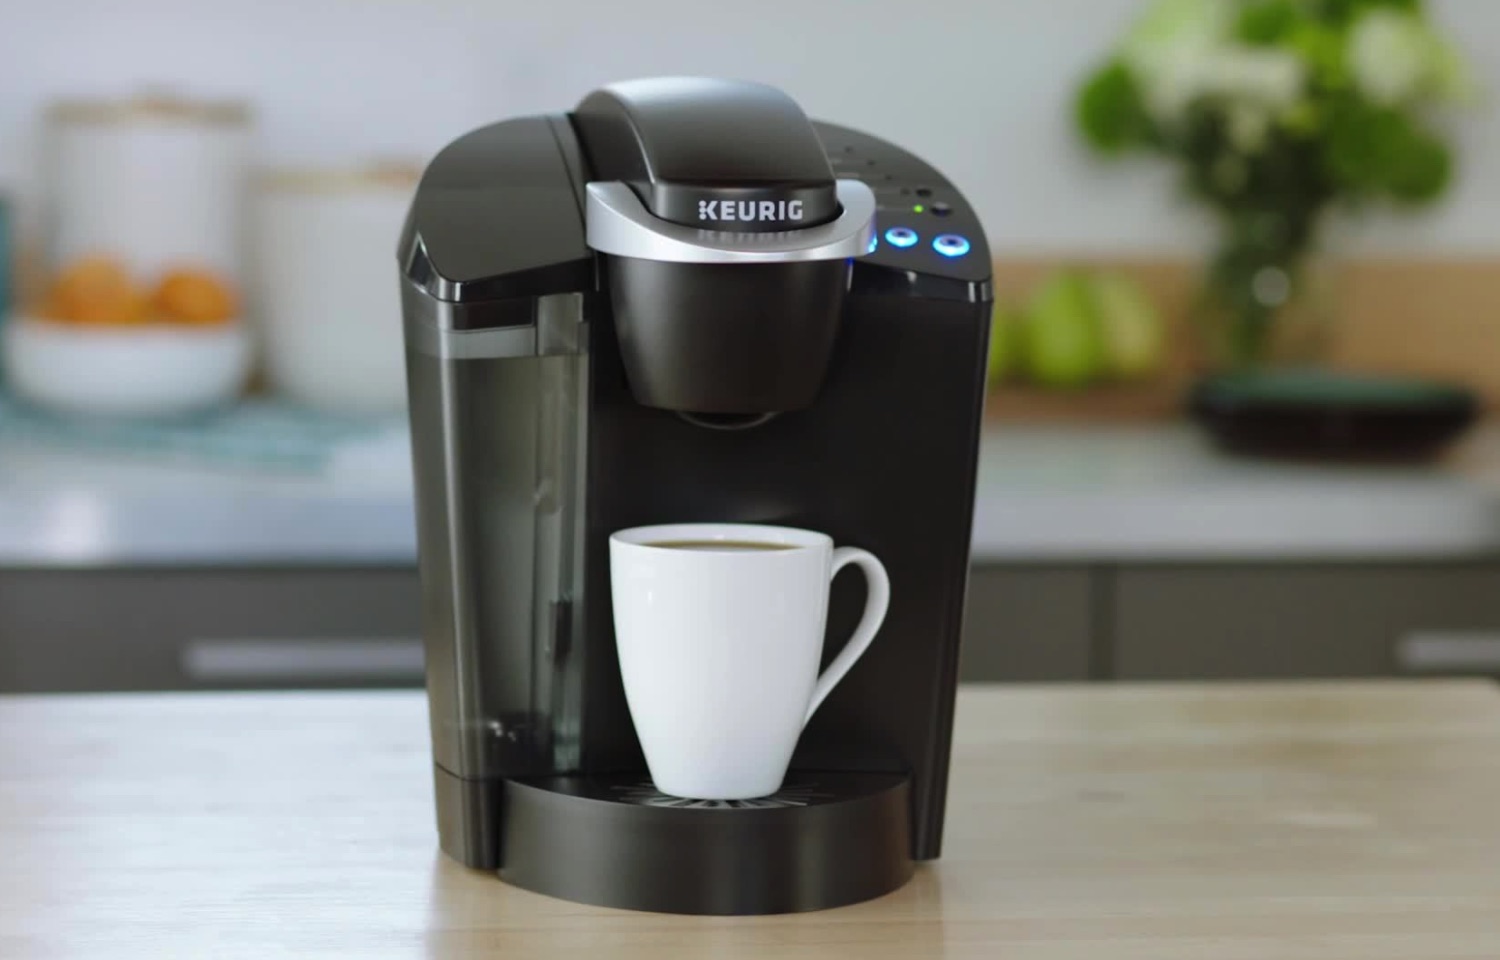 https://www.digitaltrends.com/wp-content/uploads/2020/10/keurig-k-classic-coffee-maker.jpg?fit=500%2C321&p=1